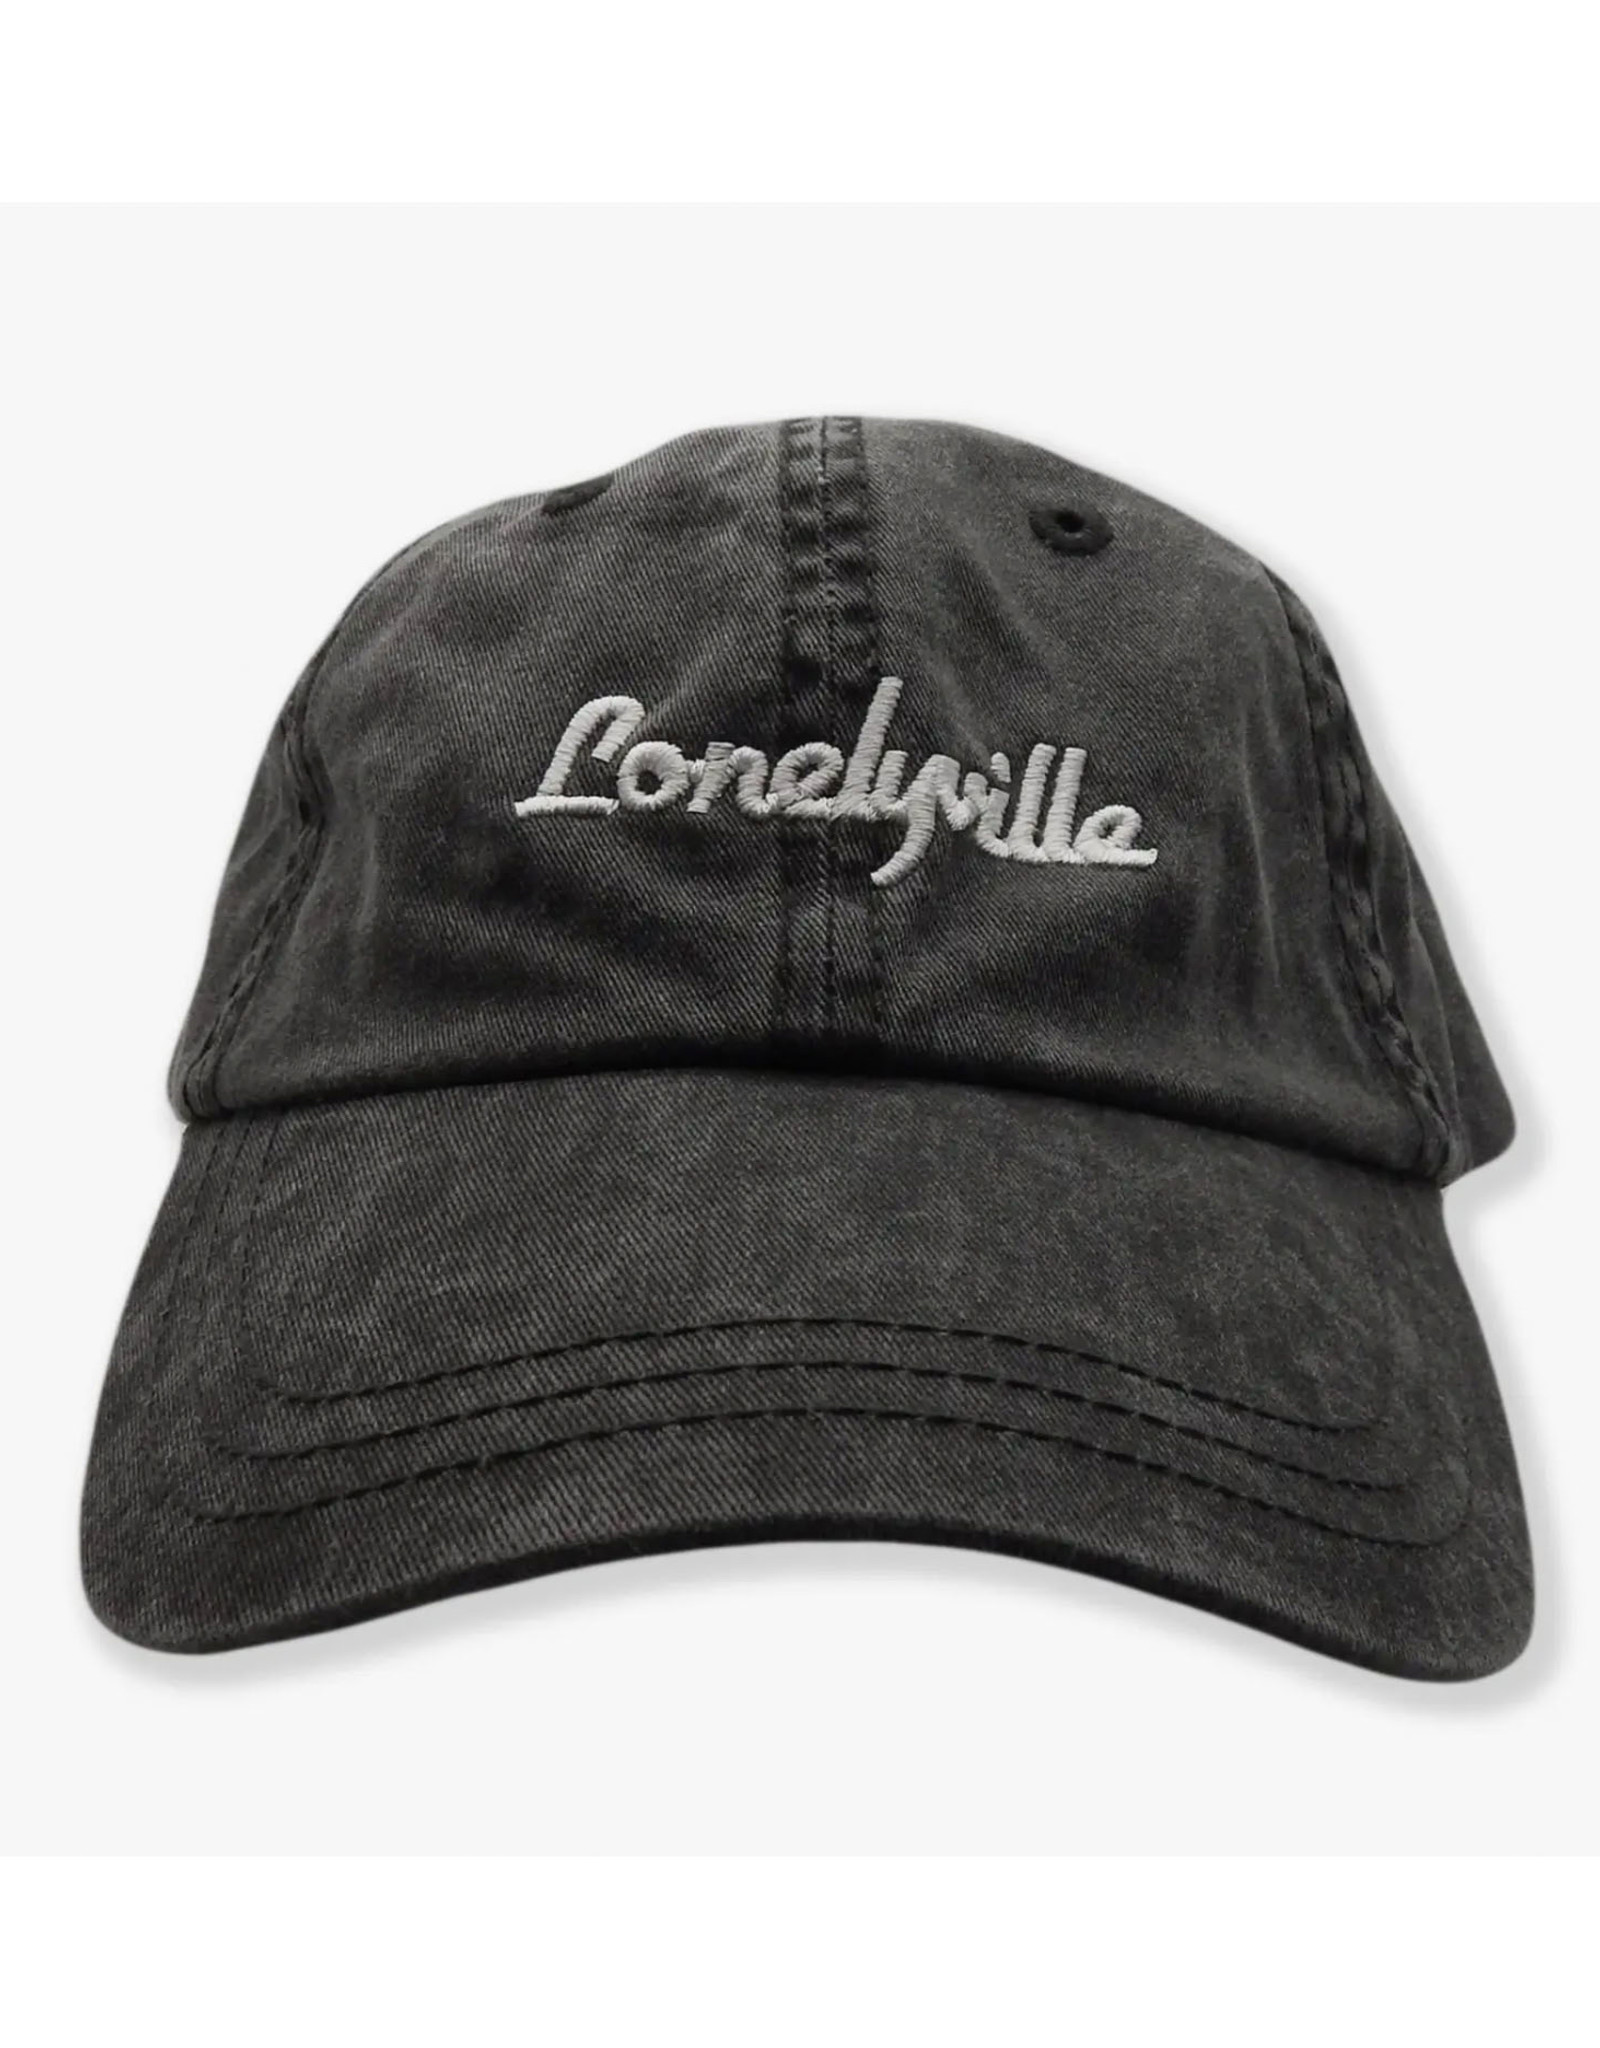 Lonelyville Dad Cap